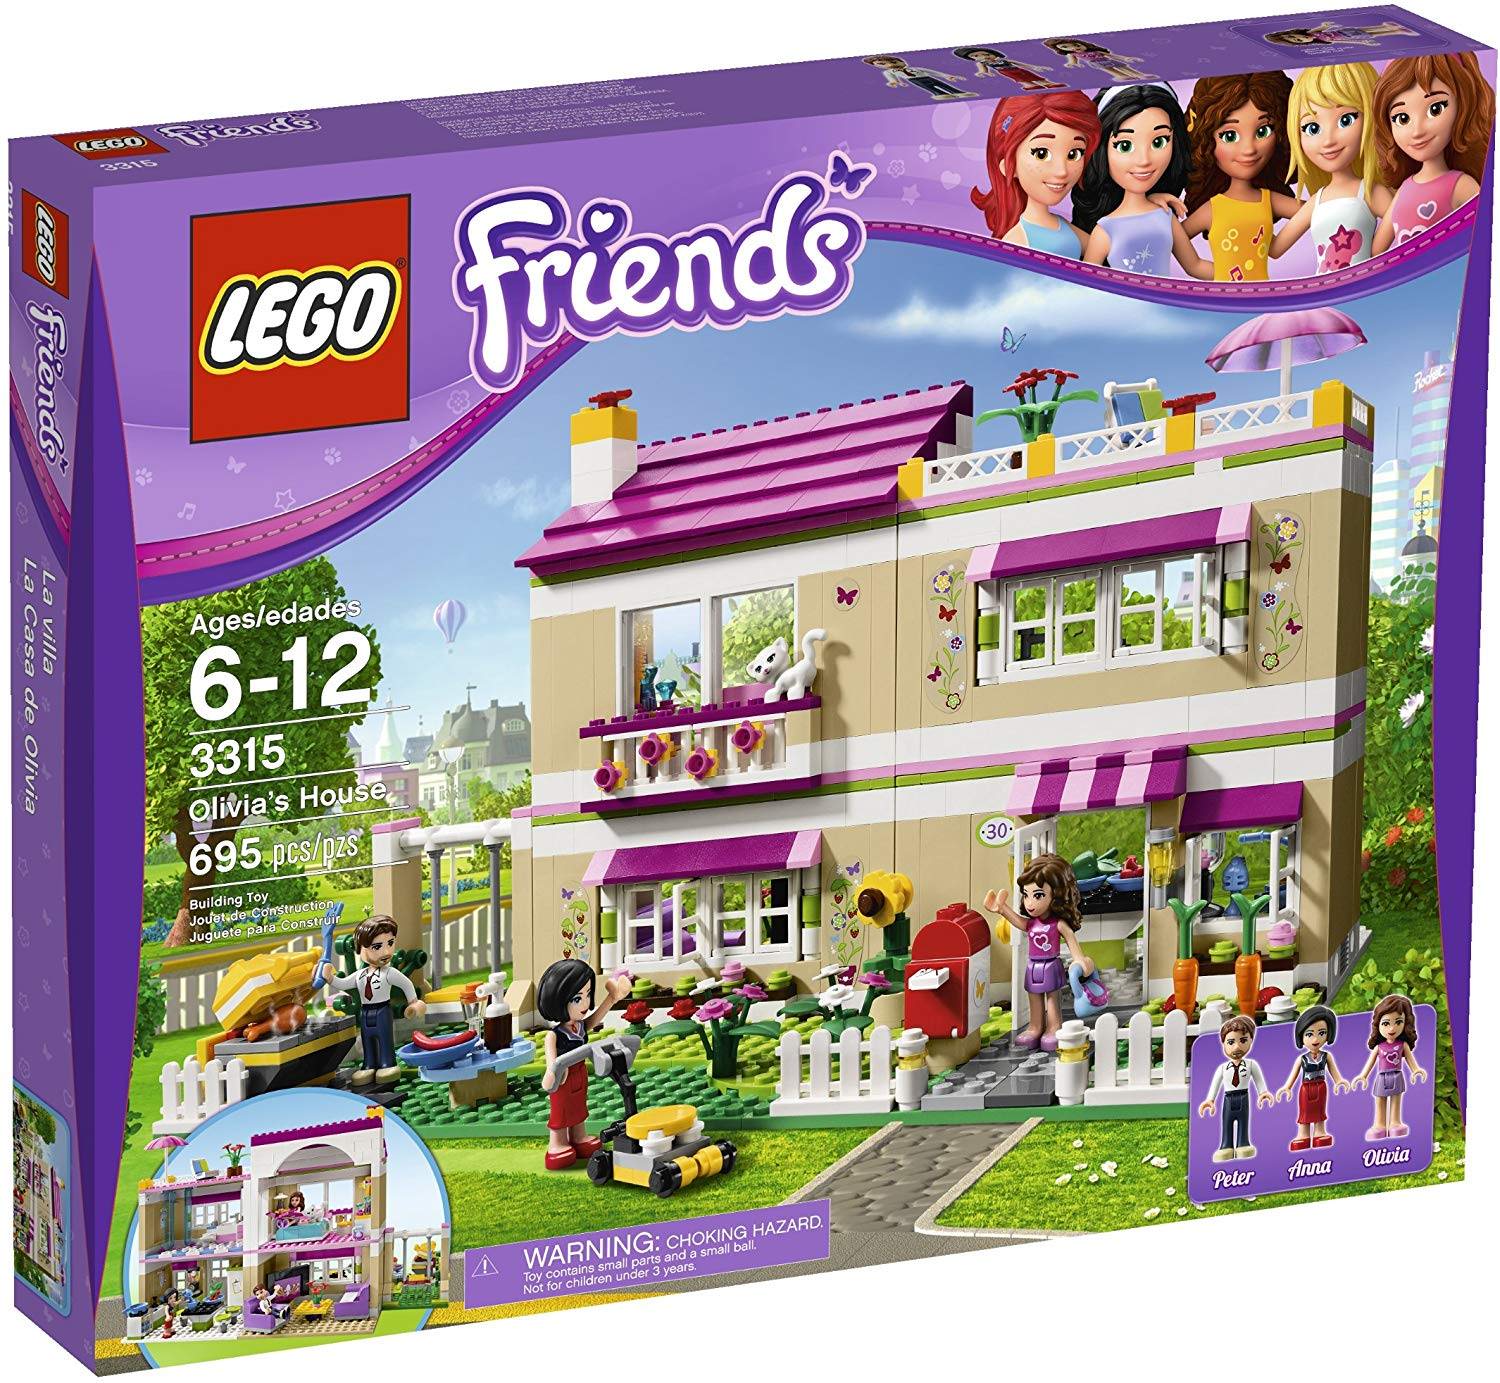 Premium Lego Sets For Girls